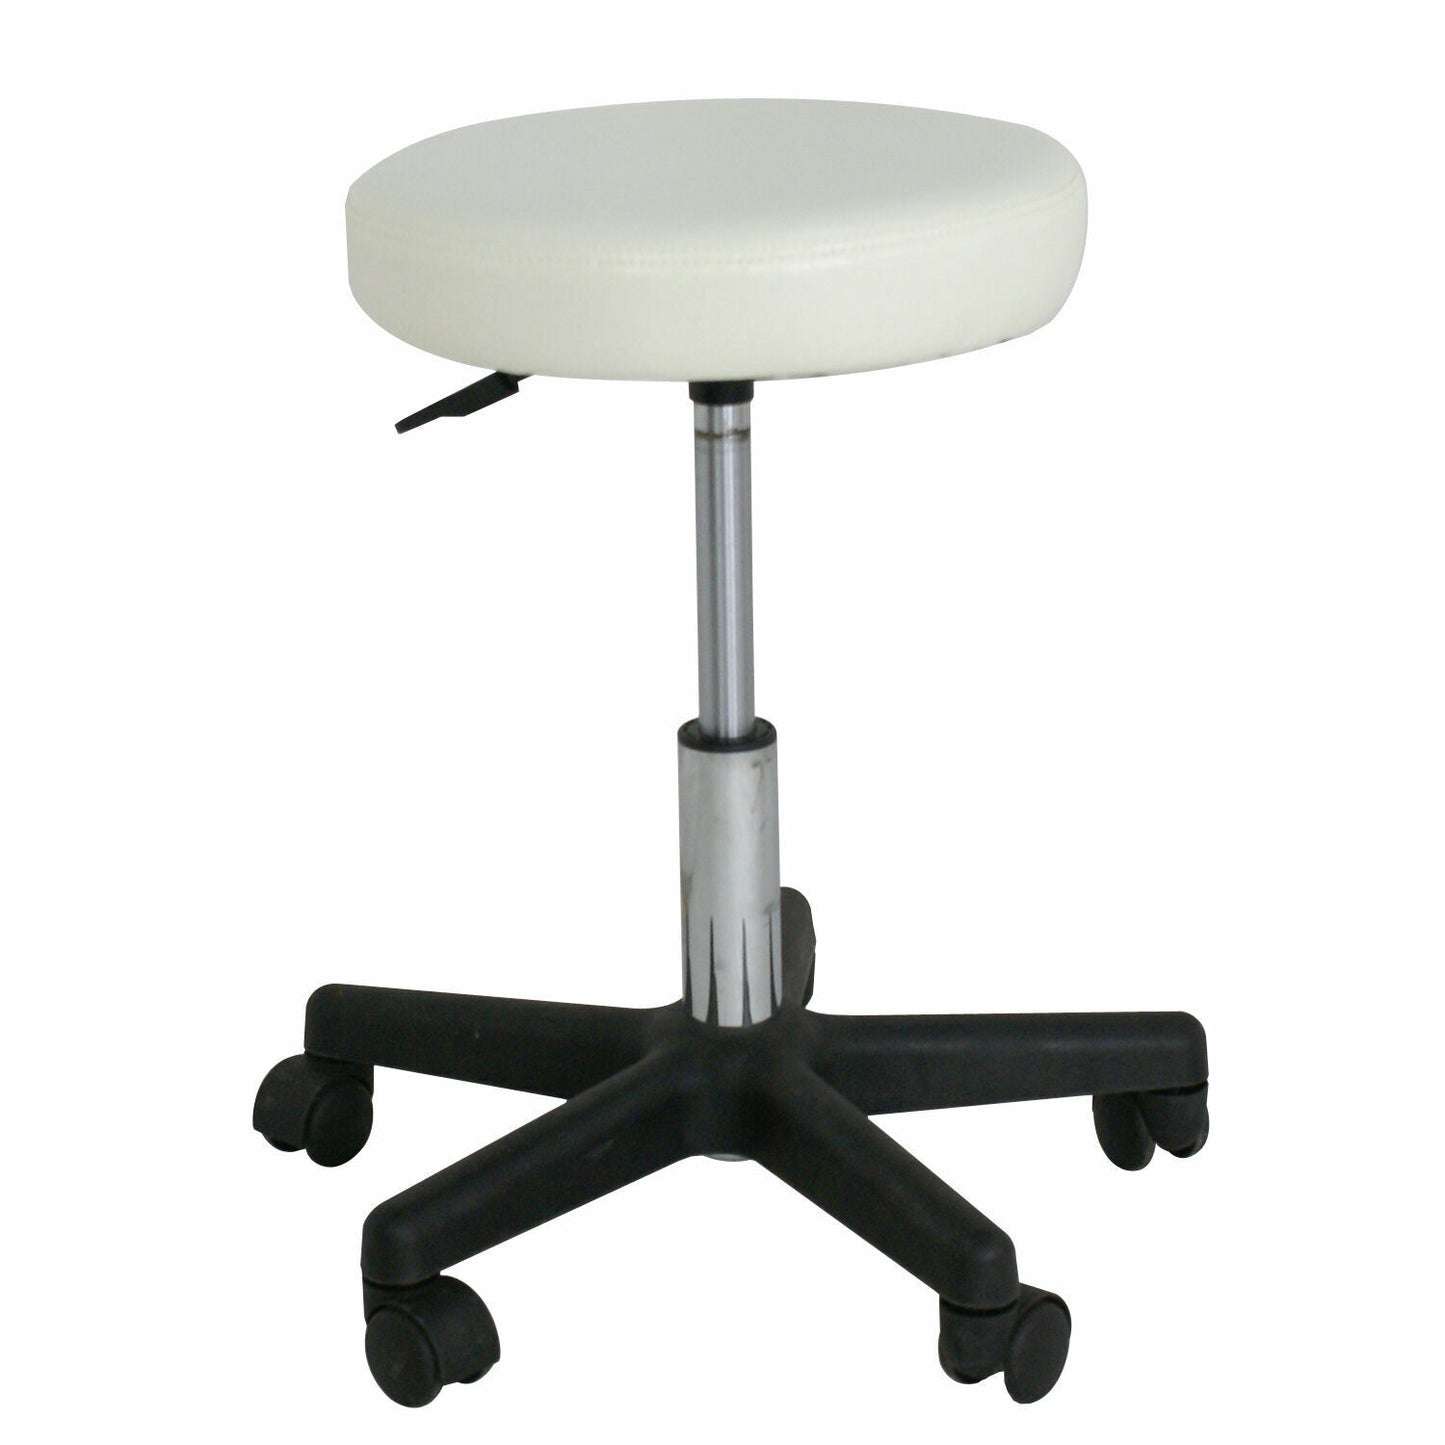 2 PCS Salon Style Swivel Round Barstools Adjustable Counter Chair Bar Massage